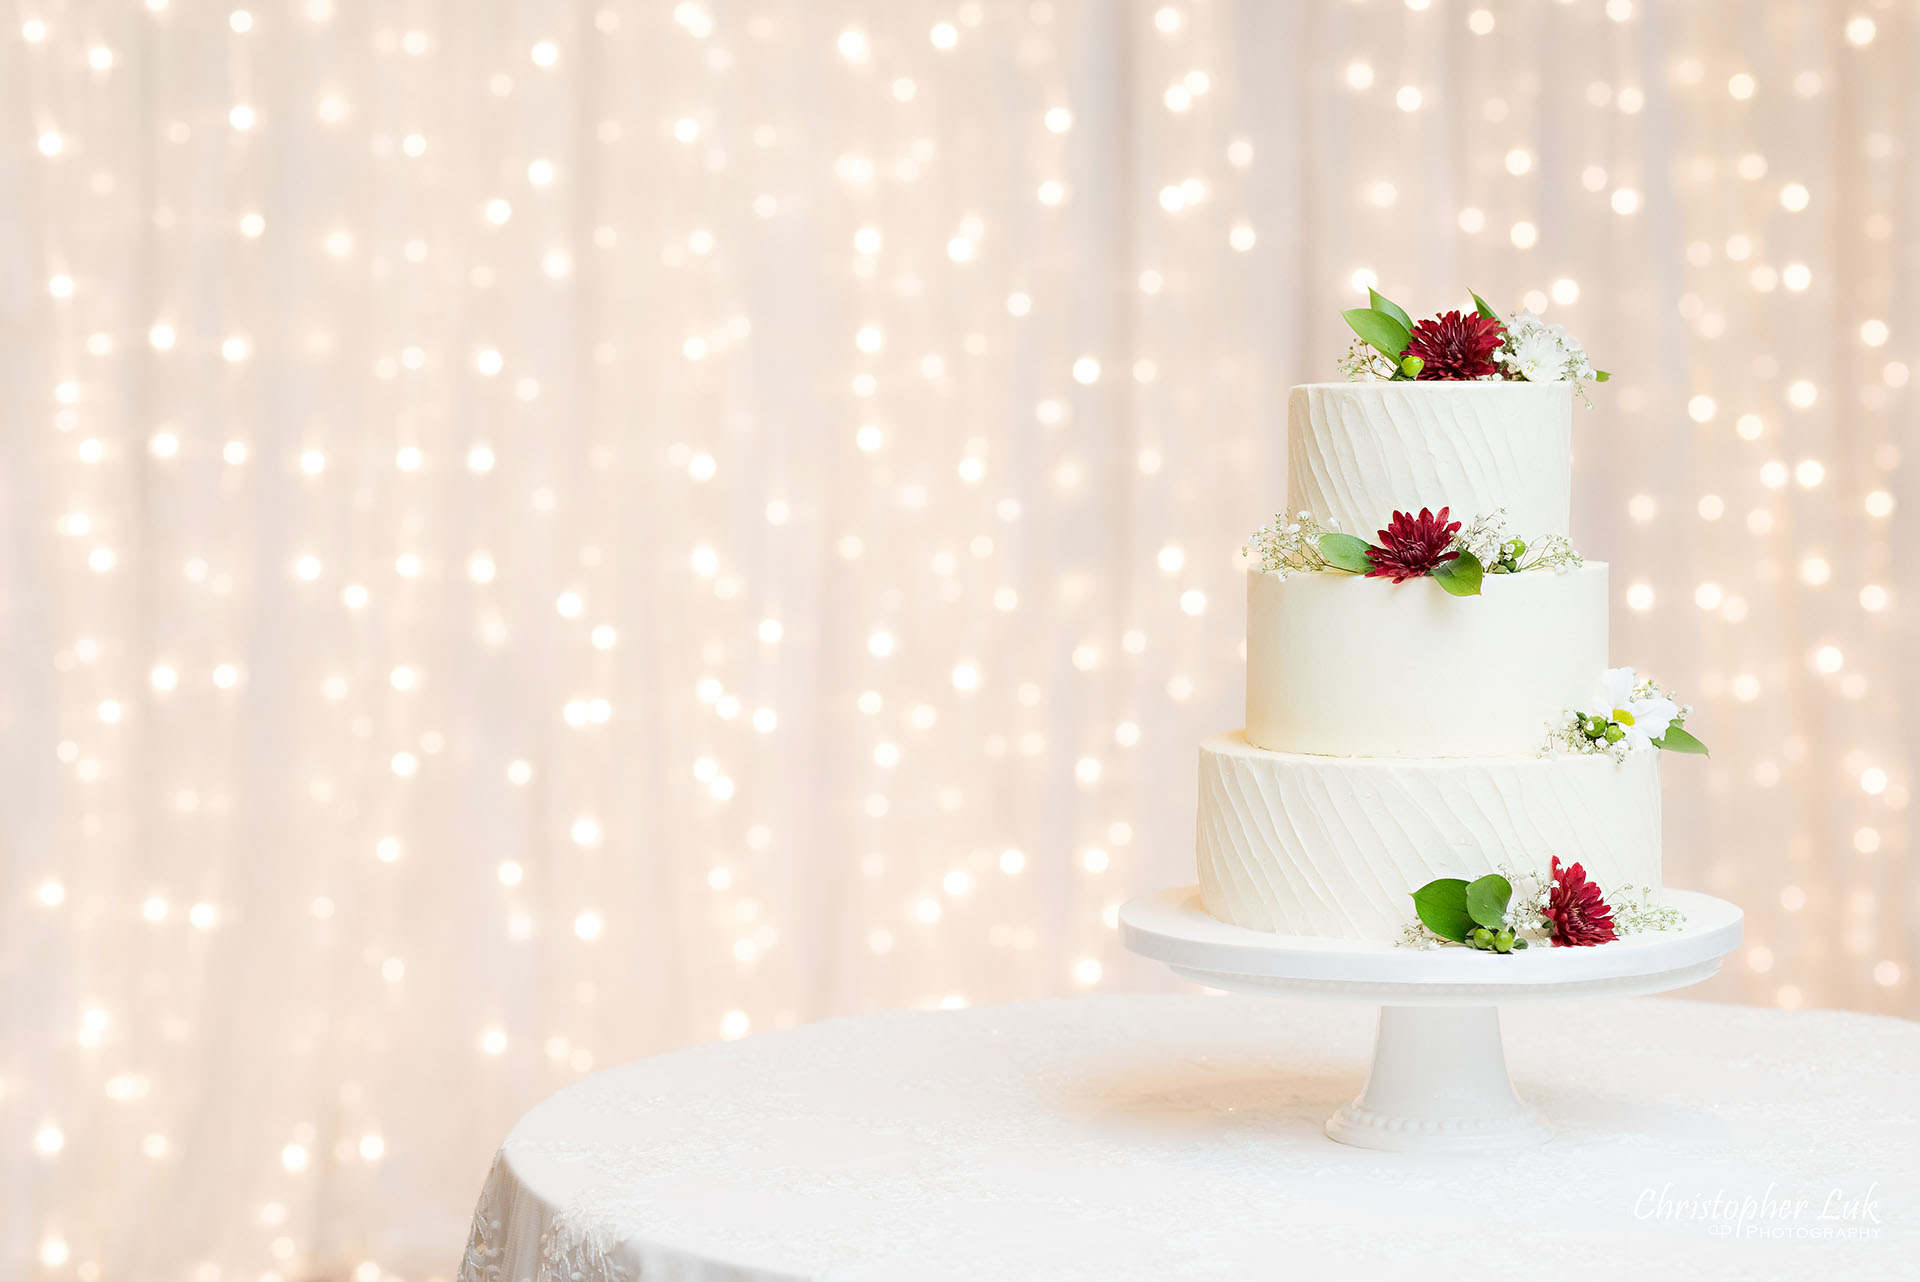 Kitchener Waterloo Regional Police Association Event Venue Wedding Cake 